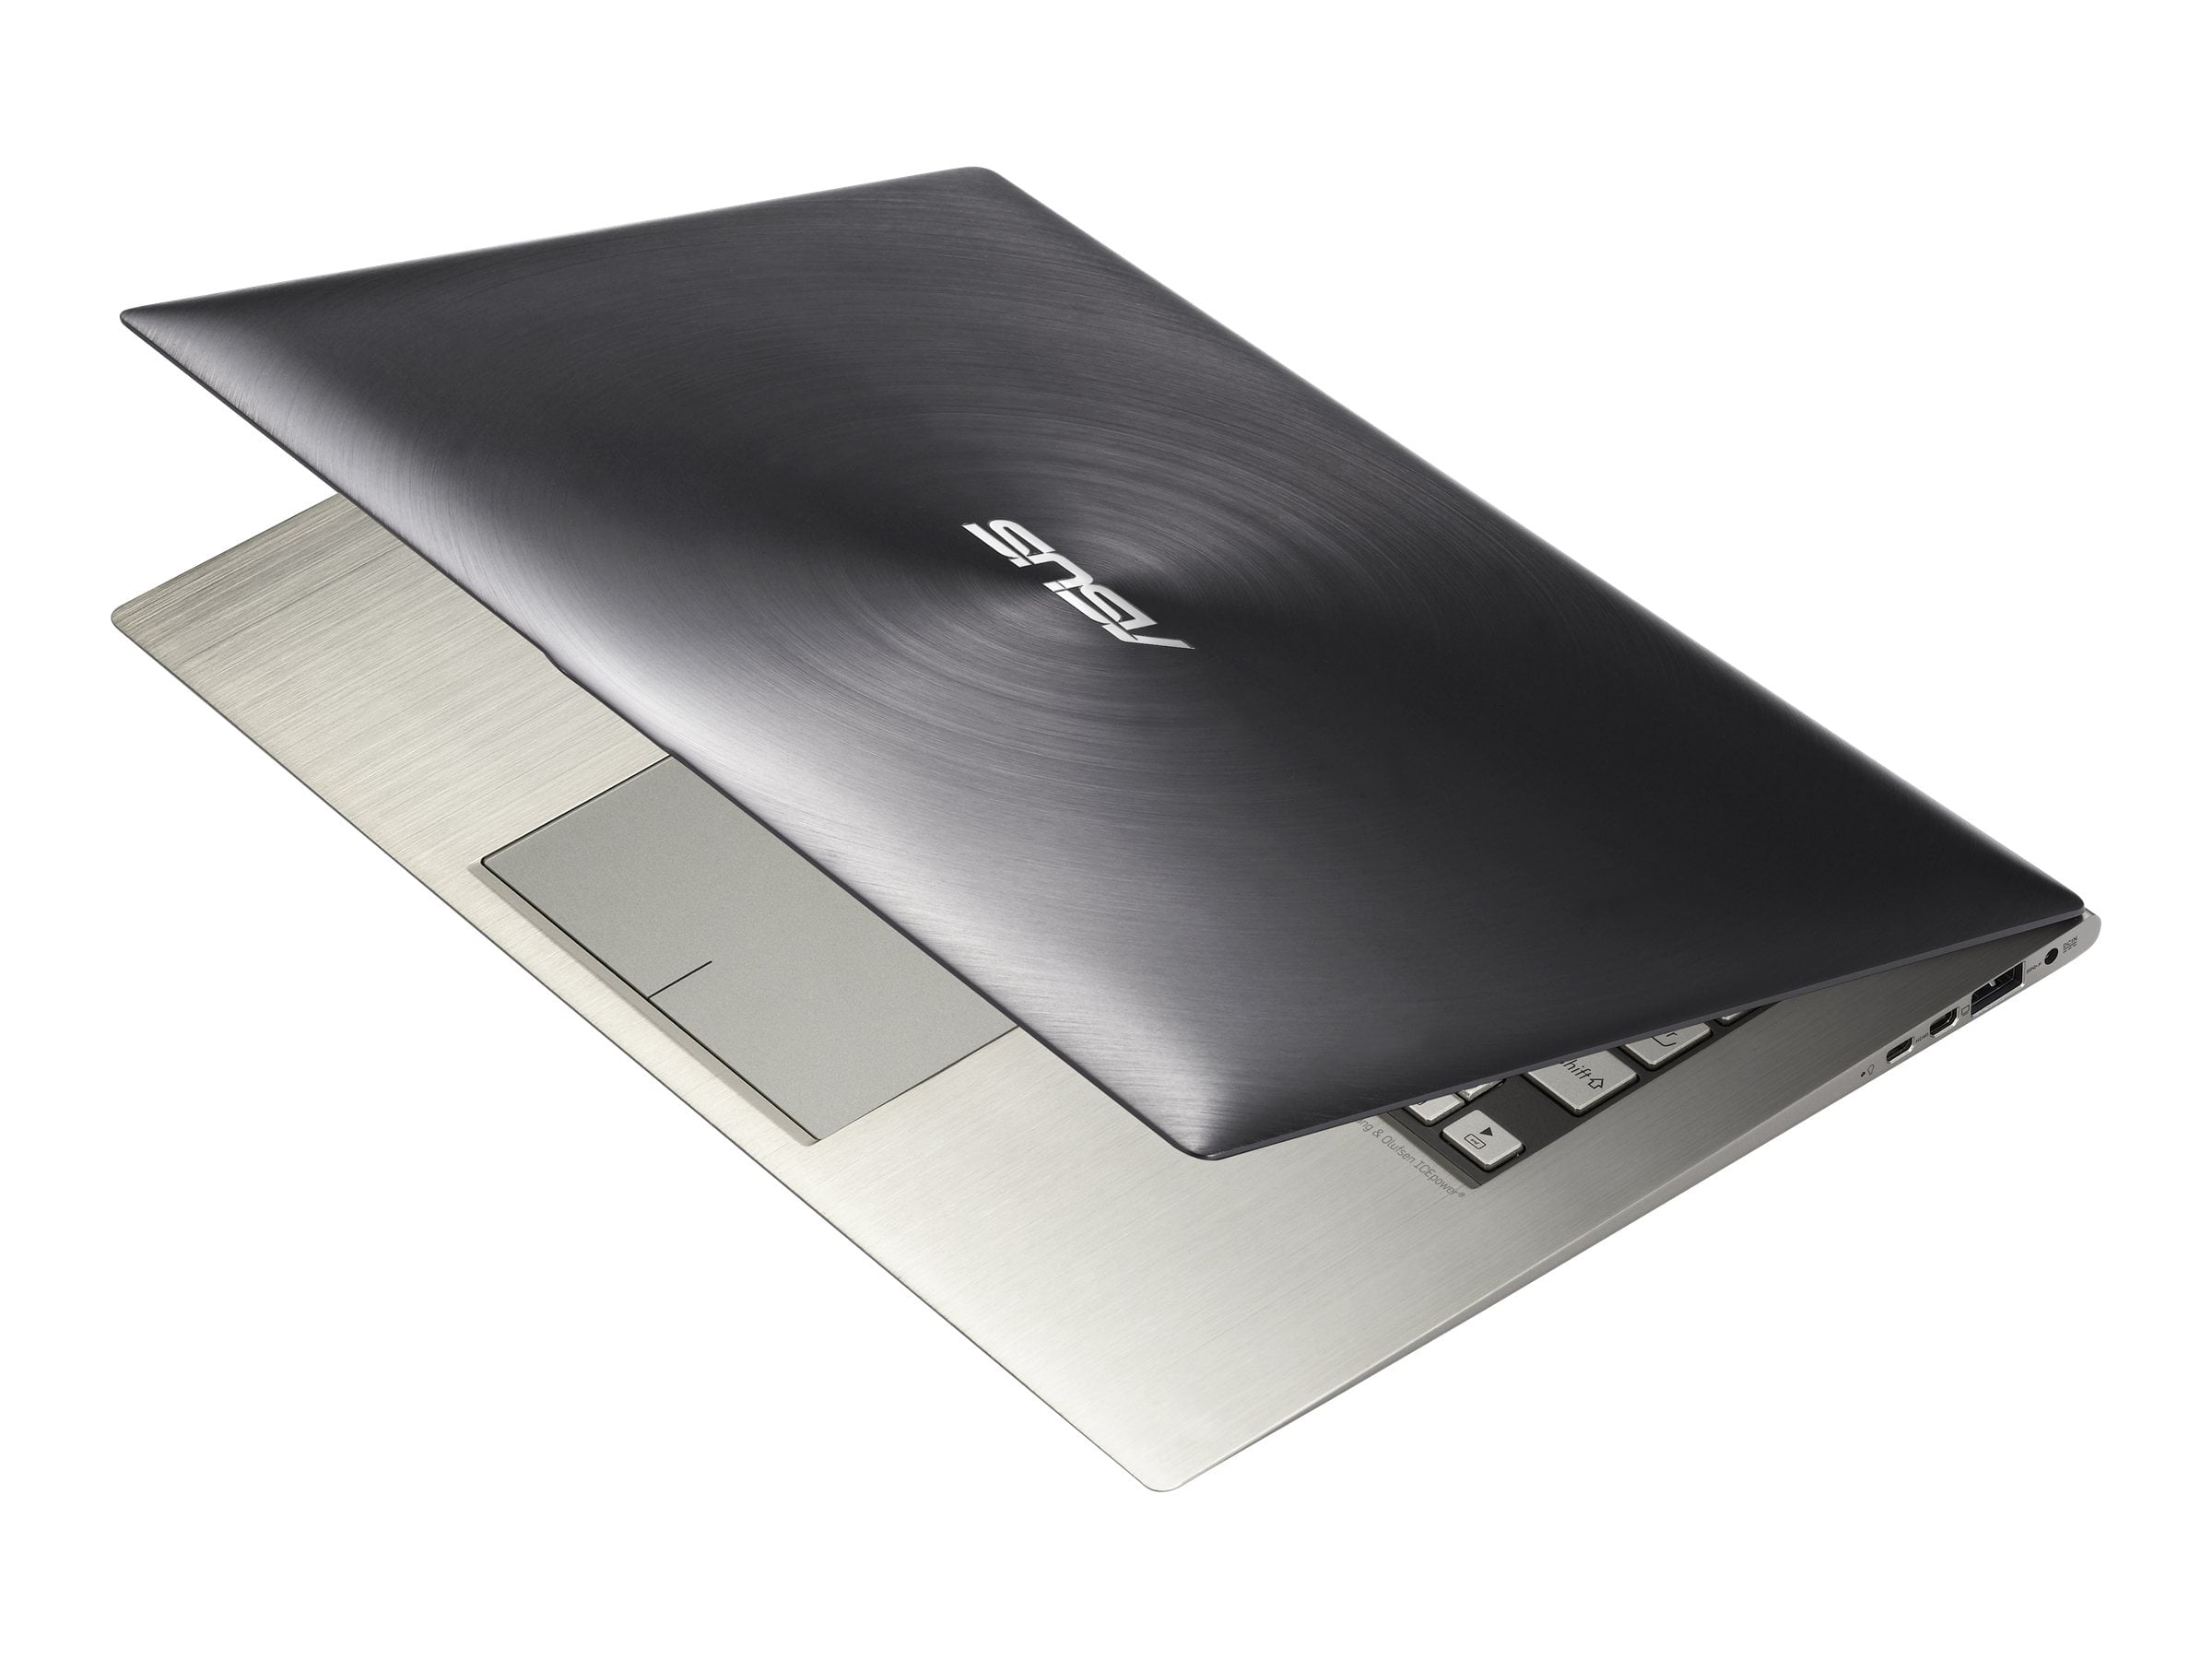 ASUS ZENBOOK UX31E-DH52 - Ultrabook - Intel Core i5 2557M / 1.7 GHz - Win 7 Home Premium 64-bit - Graphics 3000 - 4 GB RAM 128 GB SSD - 13.3" x 900 (HD+) - silver aluminum - Walmart.com